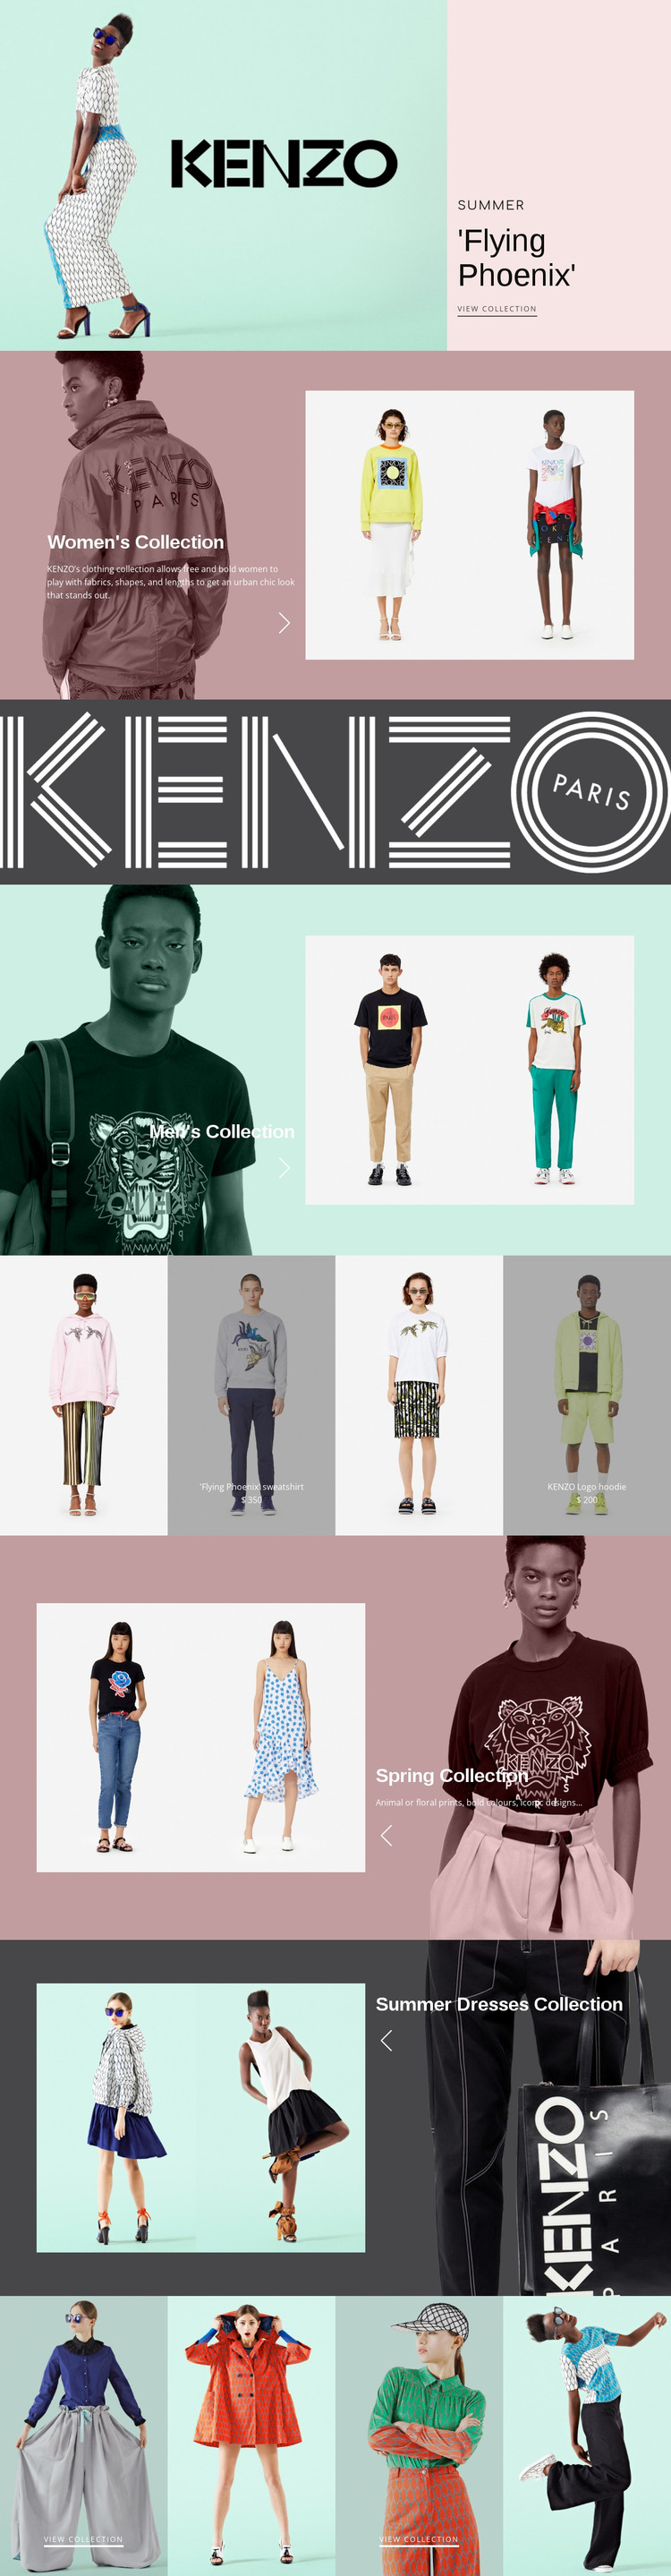 Atelier of modern fashion Website Mockup